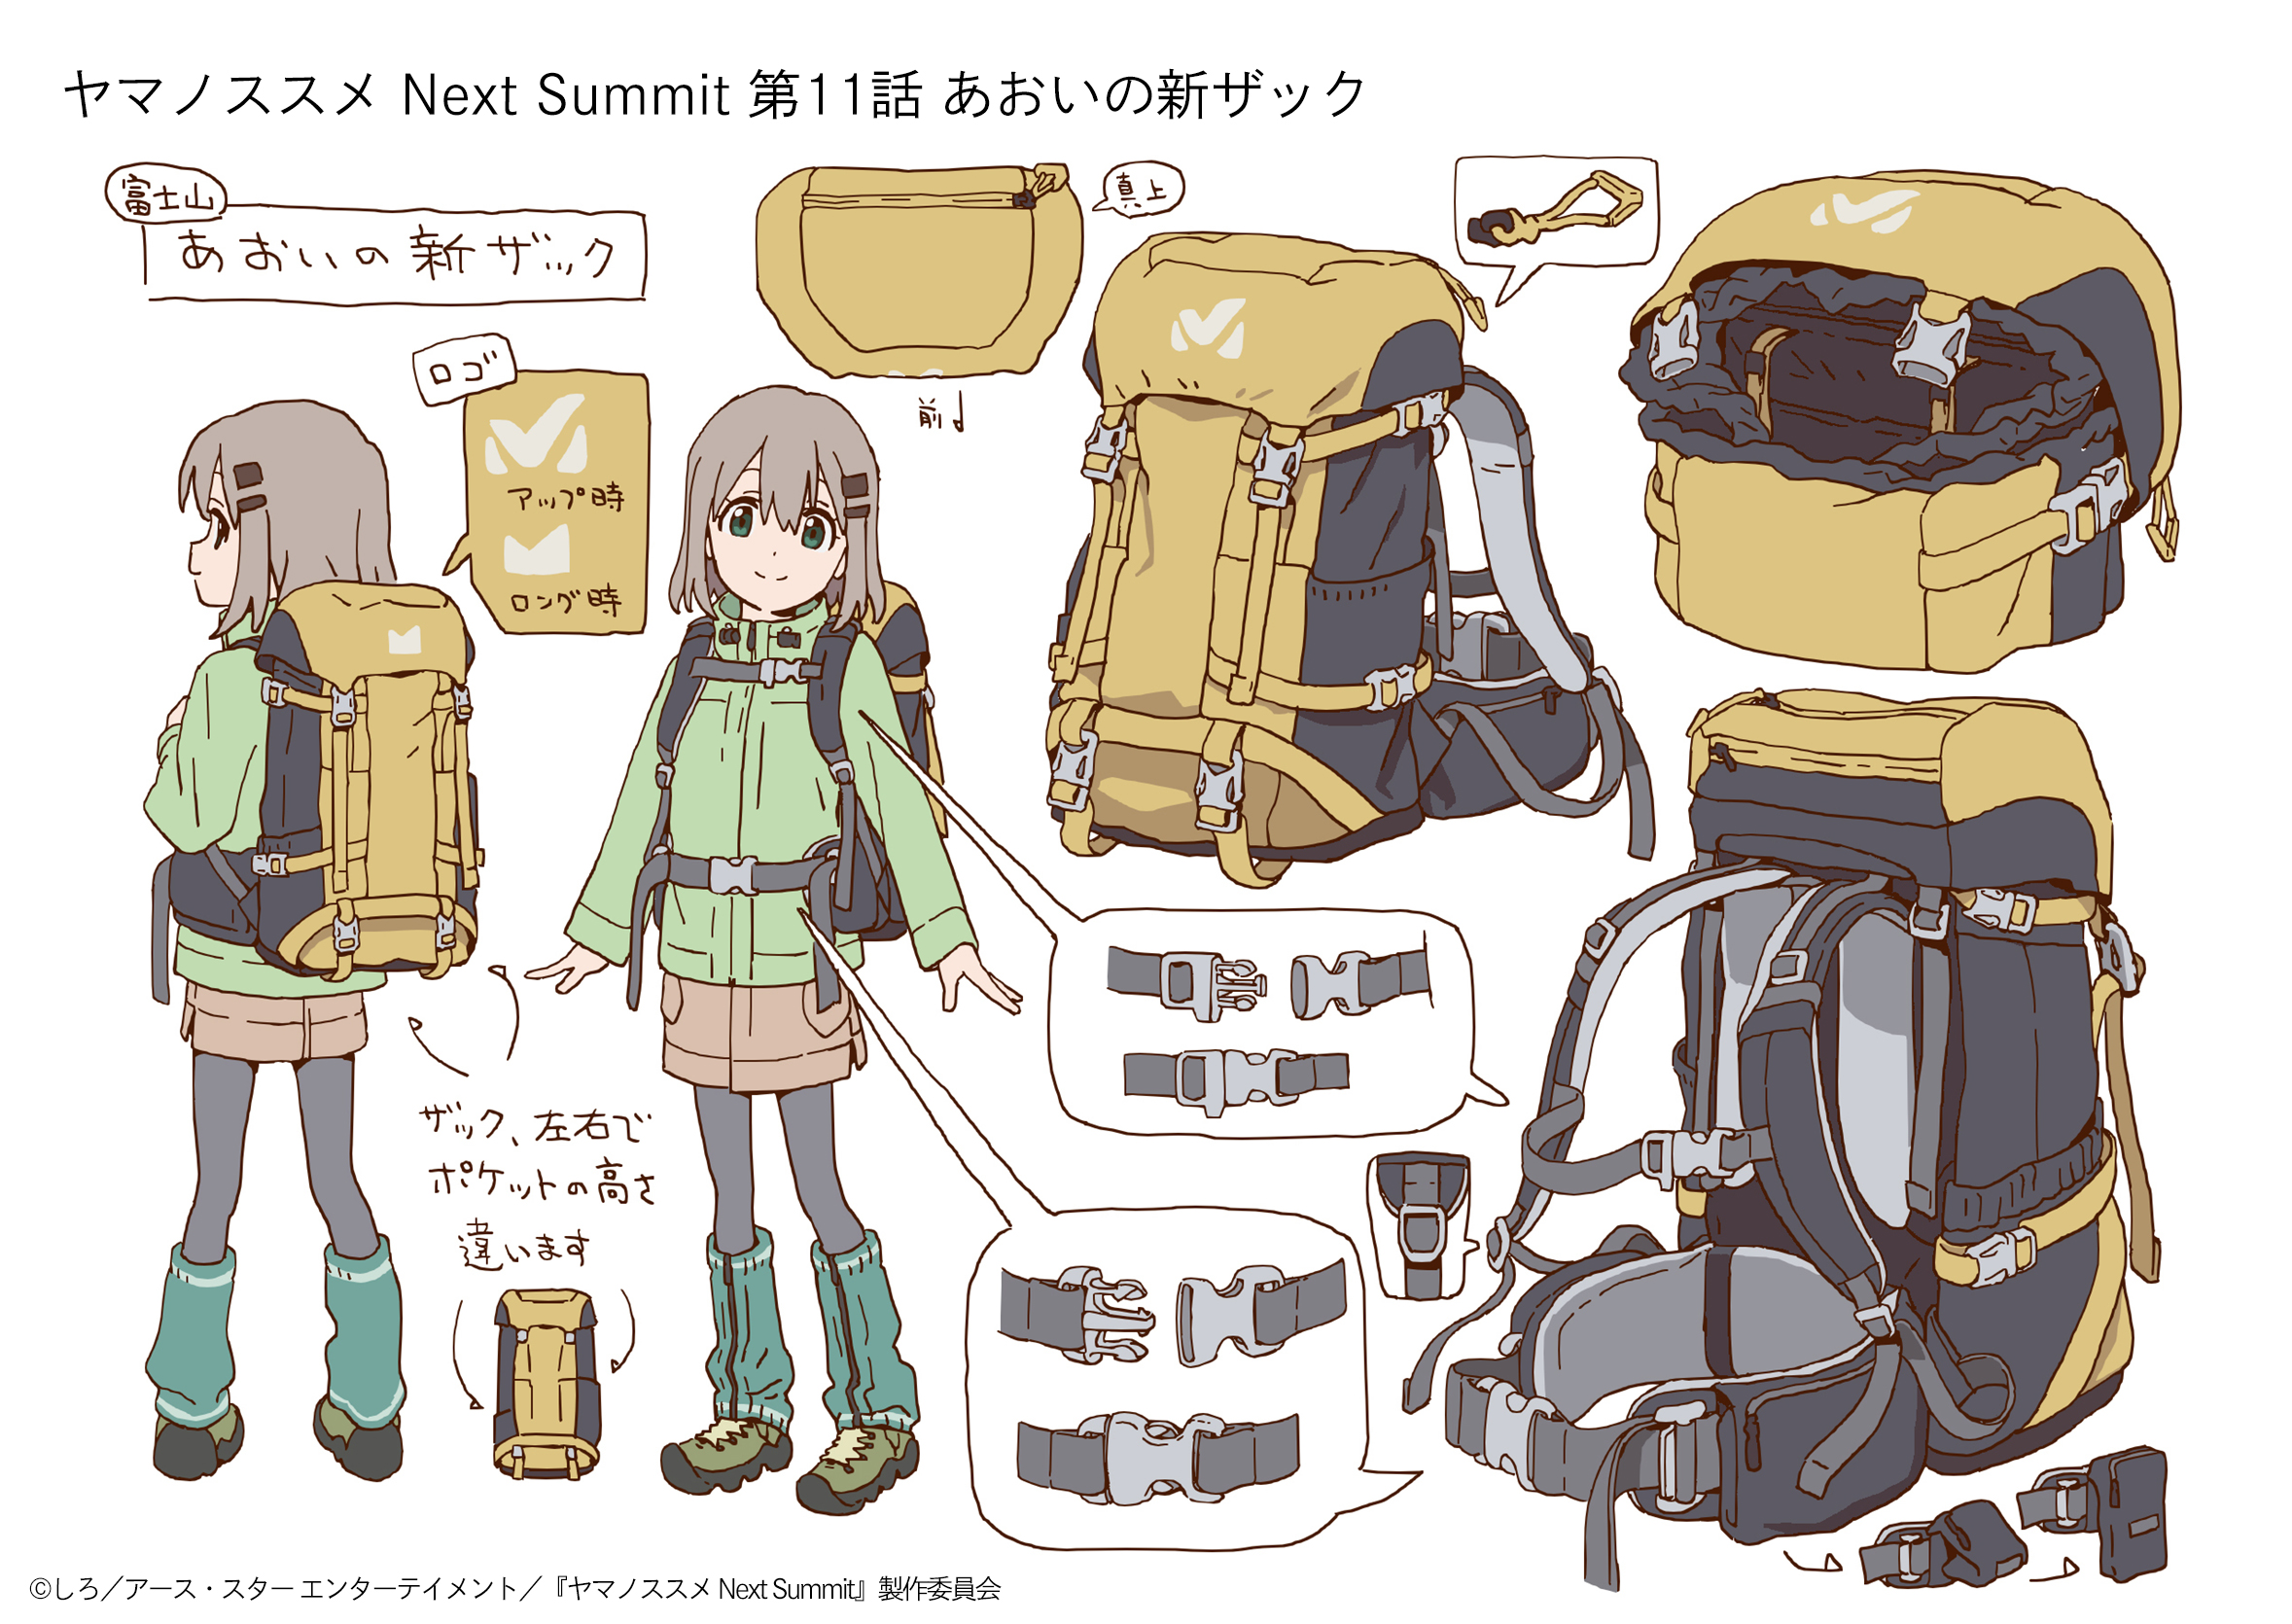 tetrix on X: Yama no Susume: Next Summit (Encouragement of Climb: Next  Summit) - Seibu Lions Collaboration Illustration   #ヤマノススメ  / X